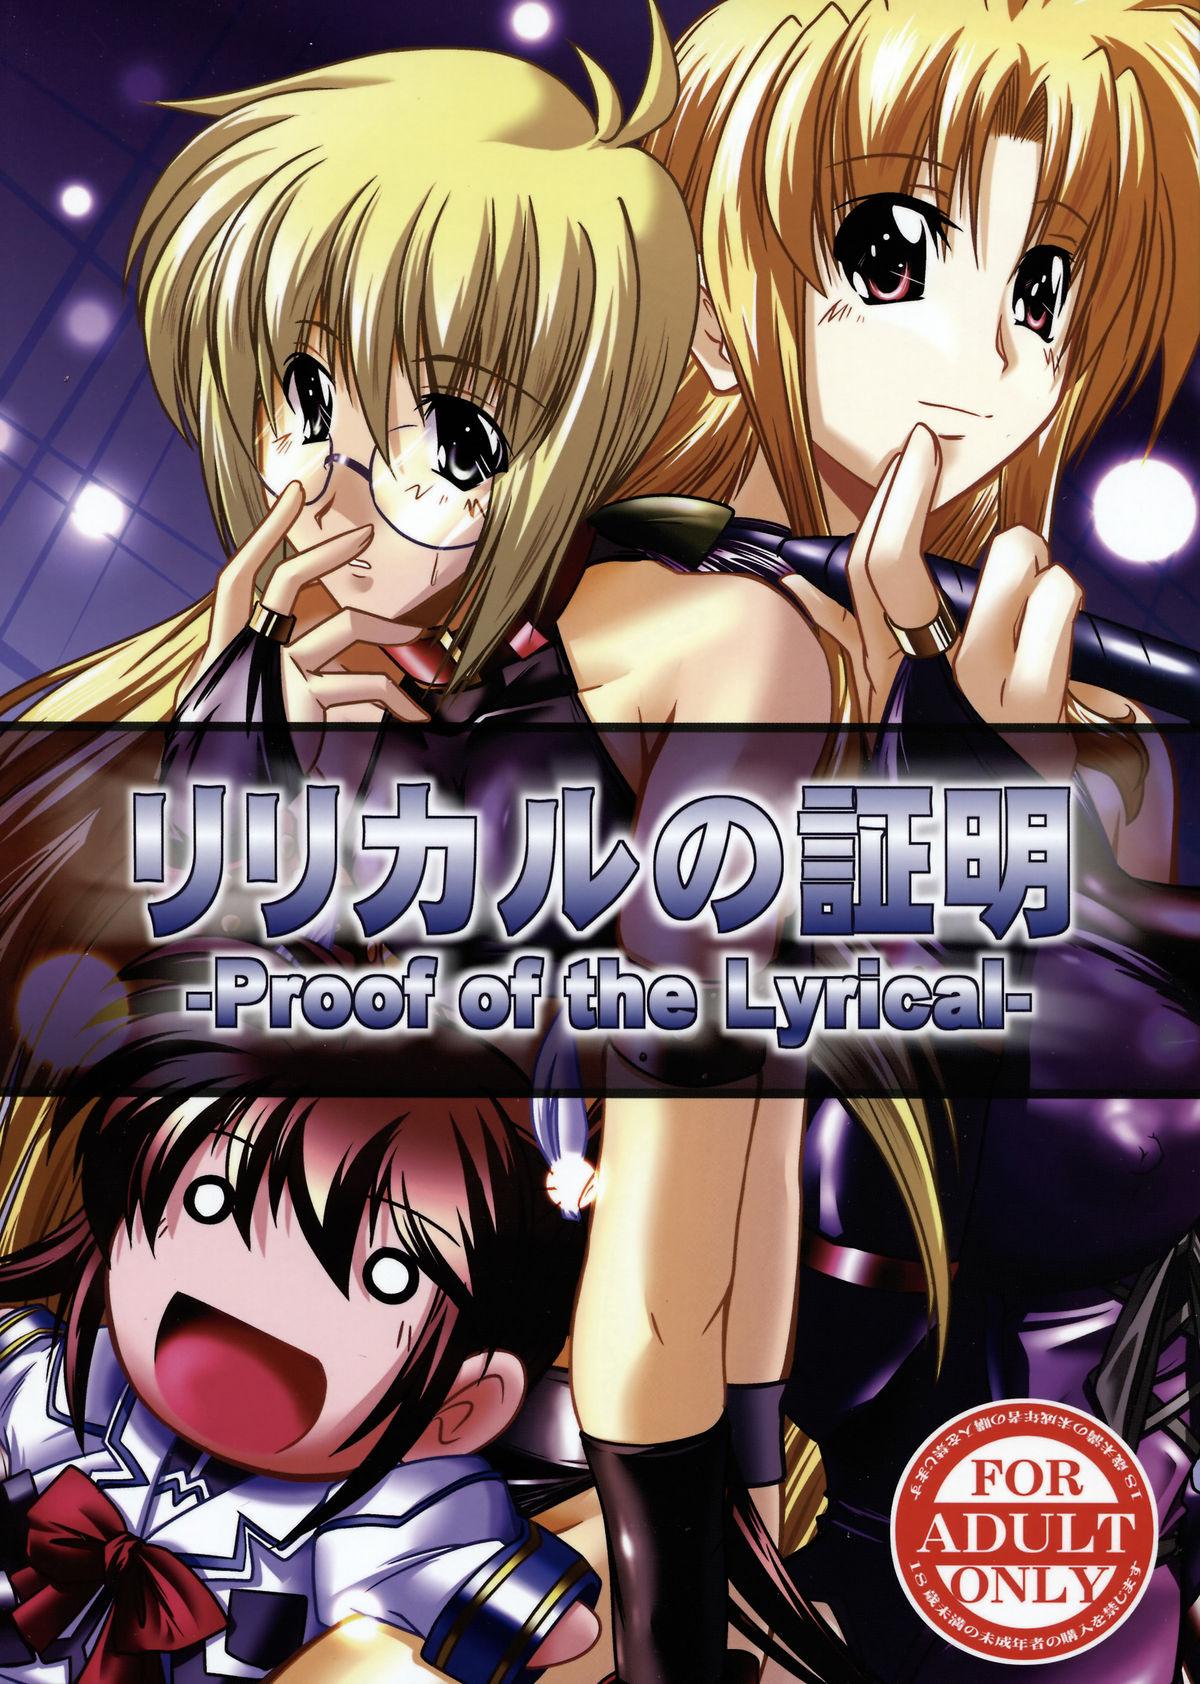 Lyrical no Shoumei - Proof of the Lyrical 0